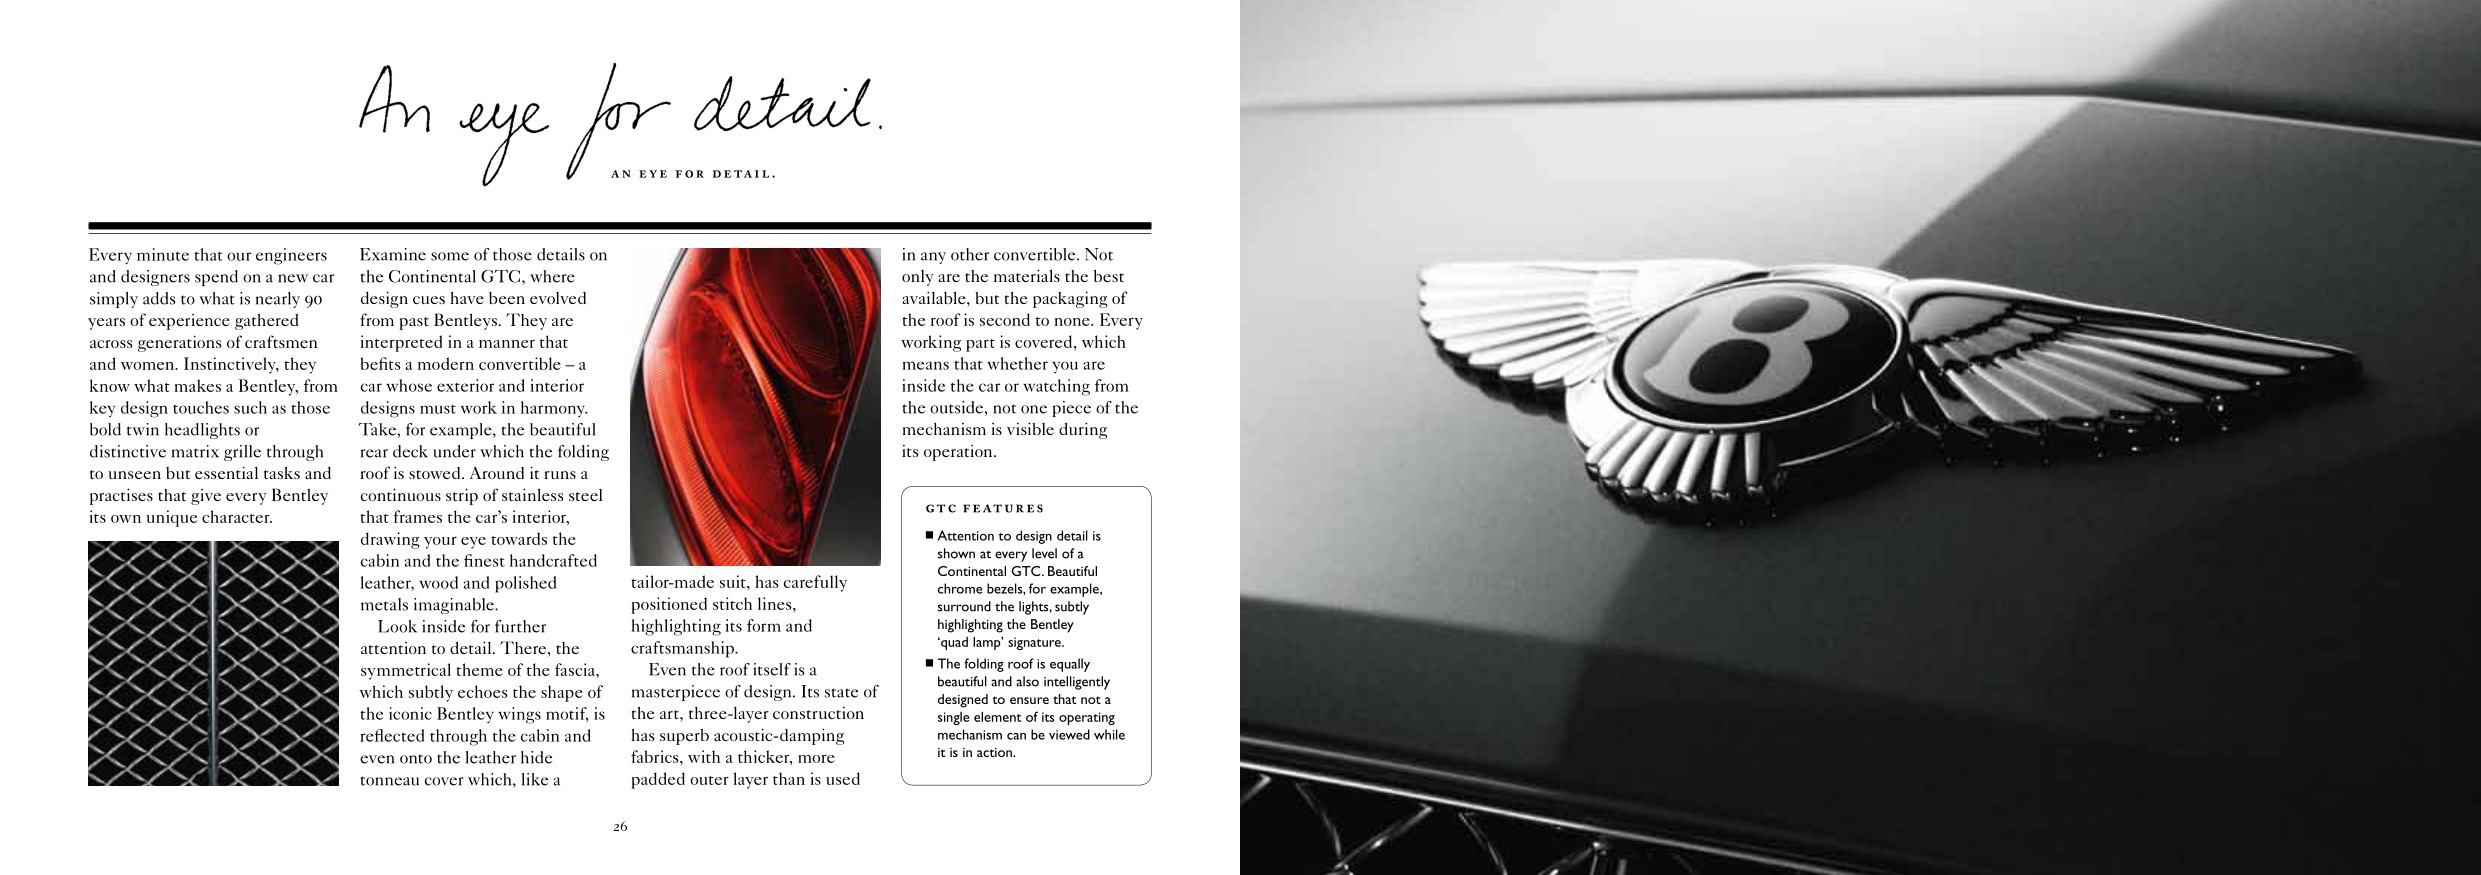 2011 Bentley Continental GTC Brochure Page 3